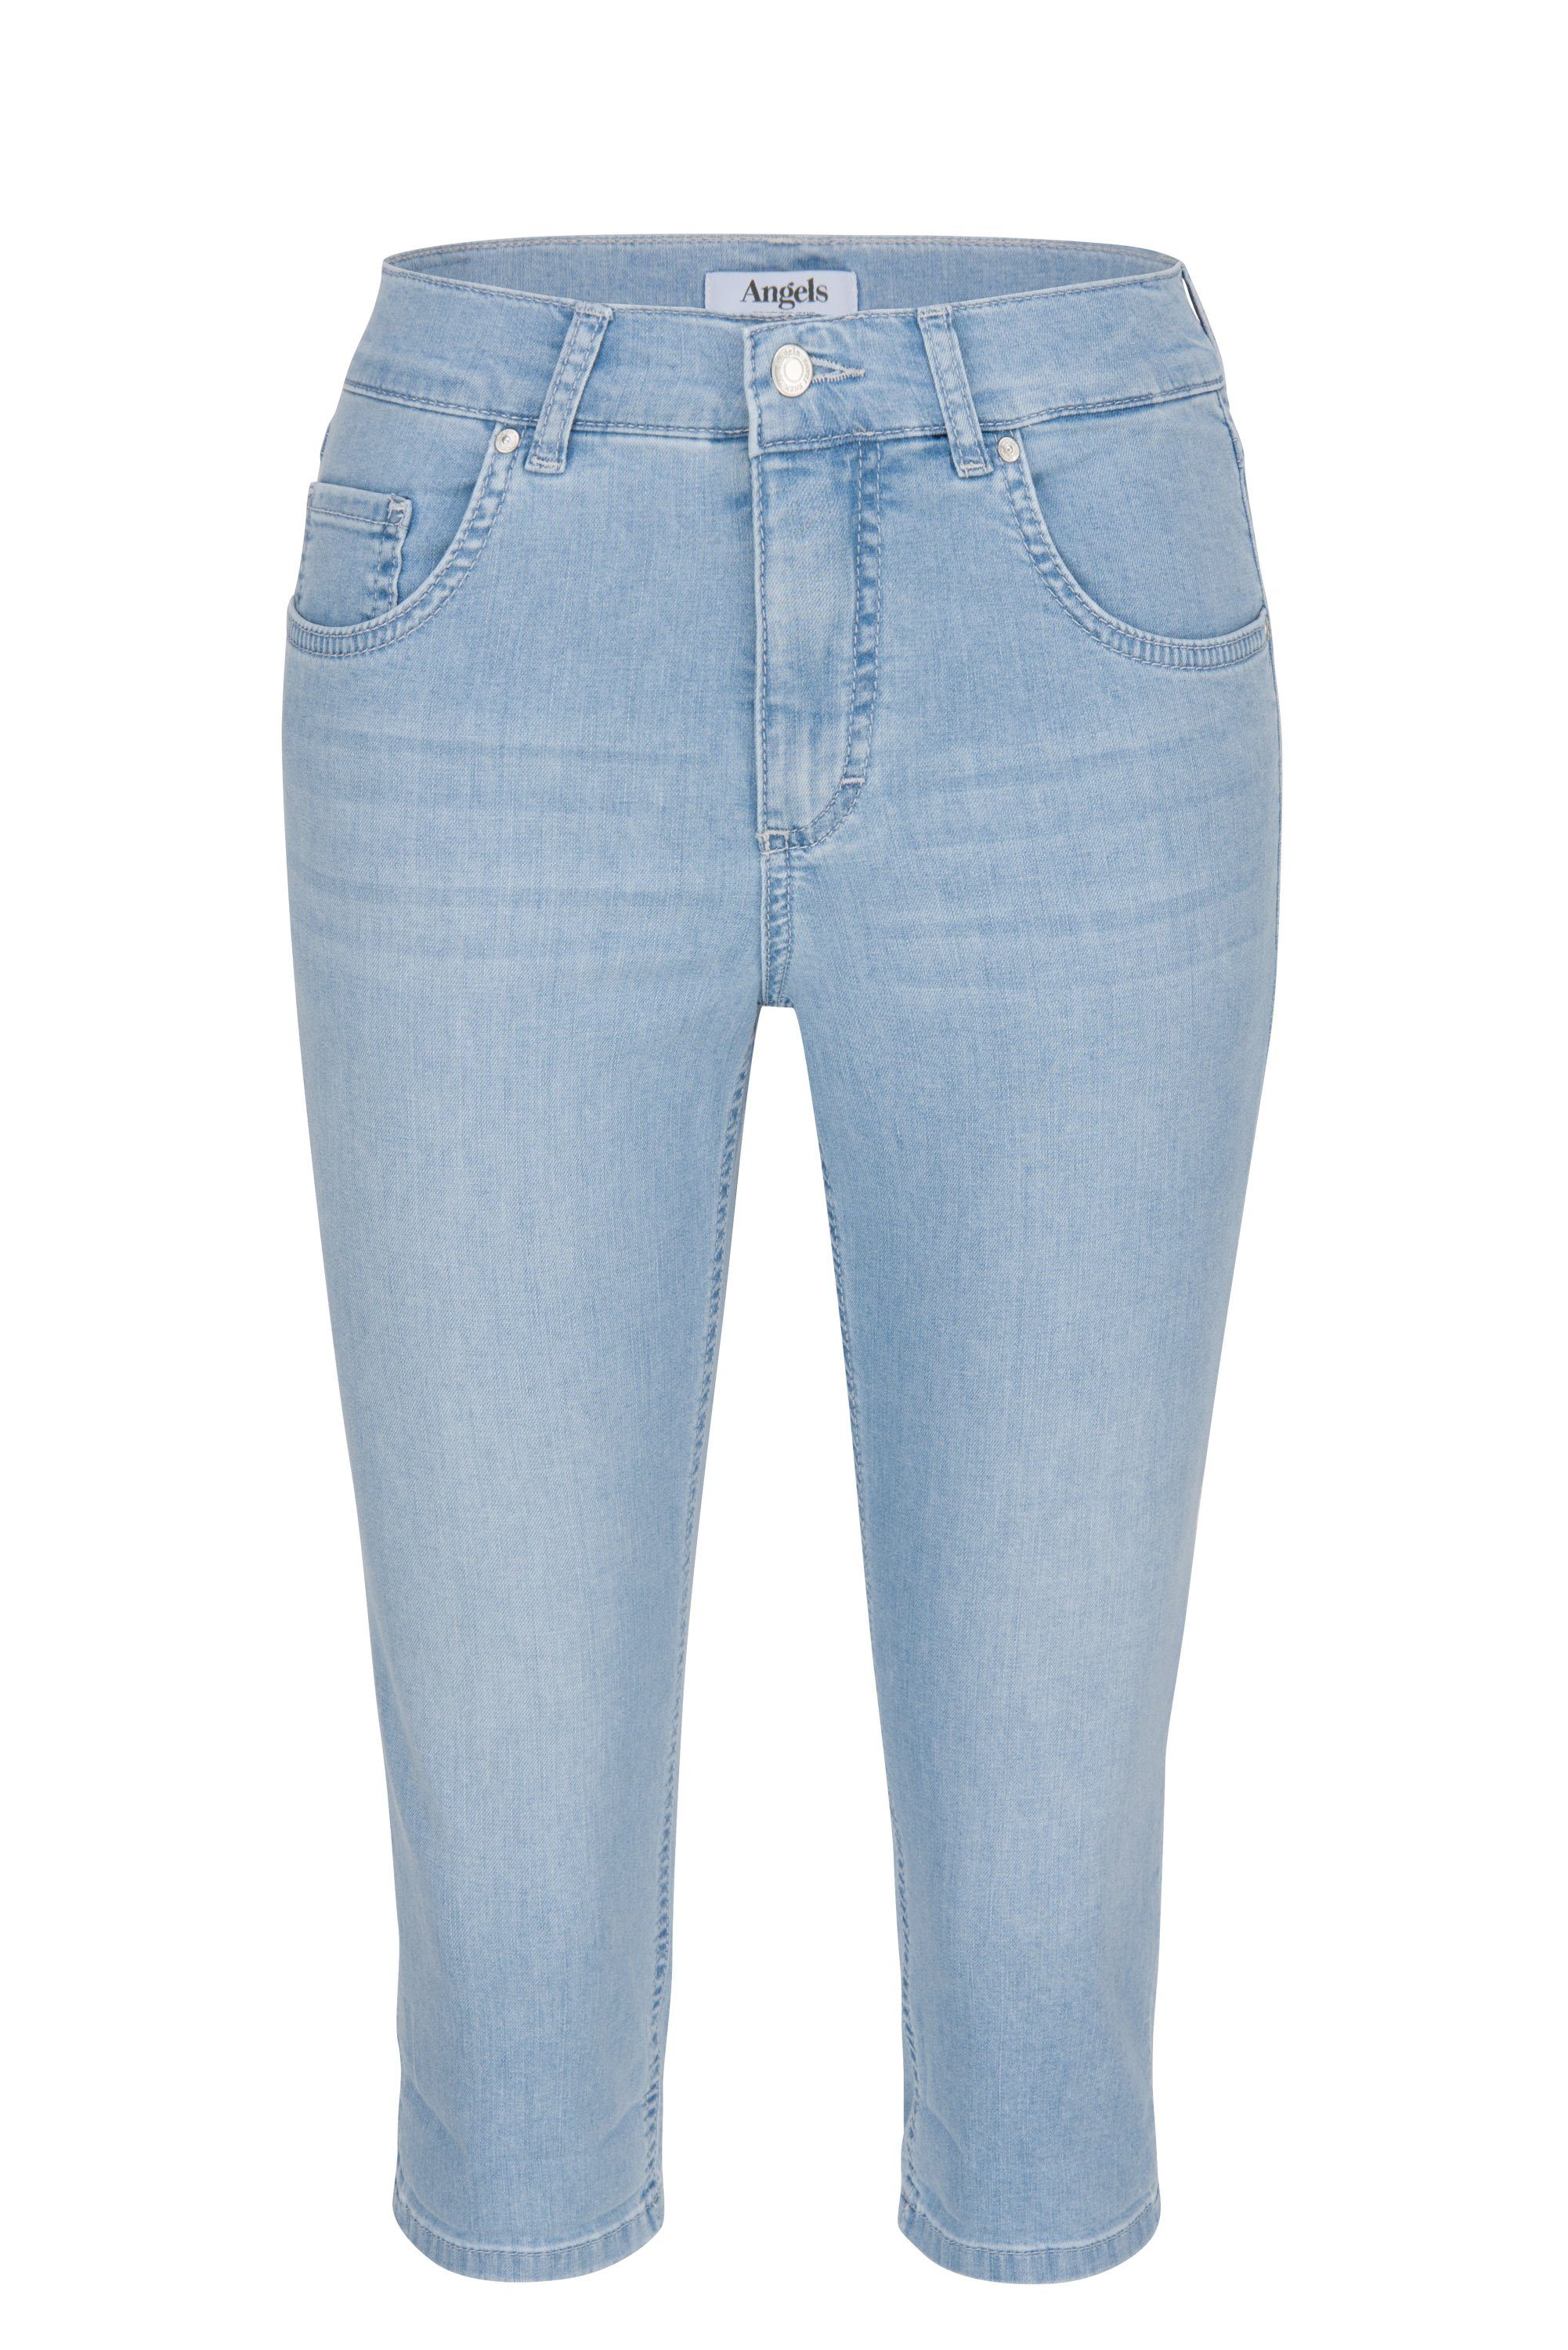 Capri TU oz Stoffgewicht: Label-Applikationen, mit ANGELS 5-Pocket-Jeans mit Jeans 7,5 Used-Look